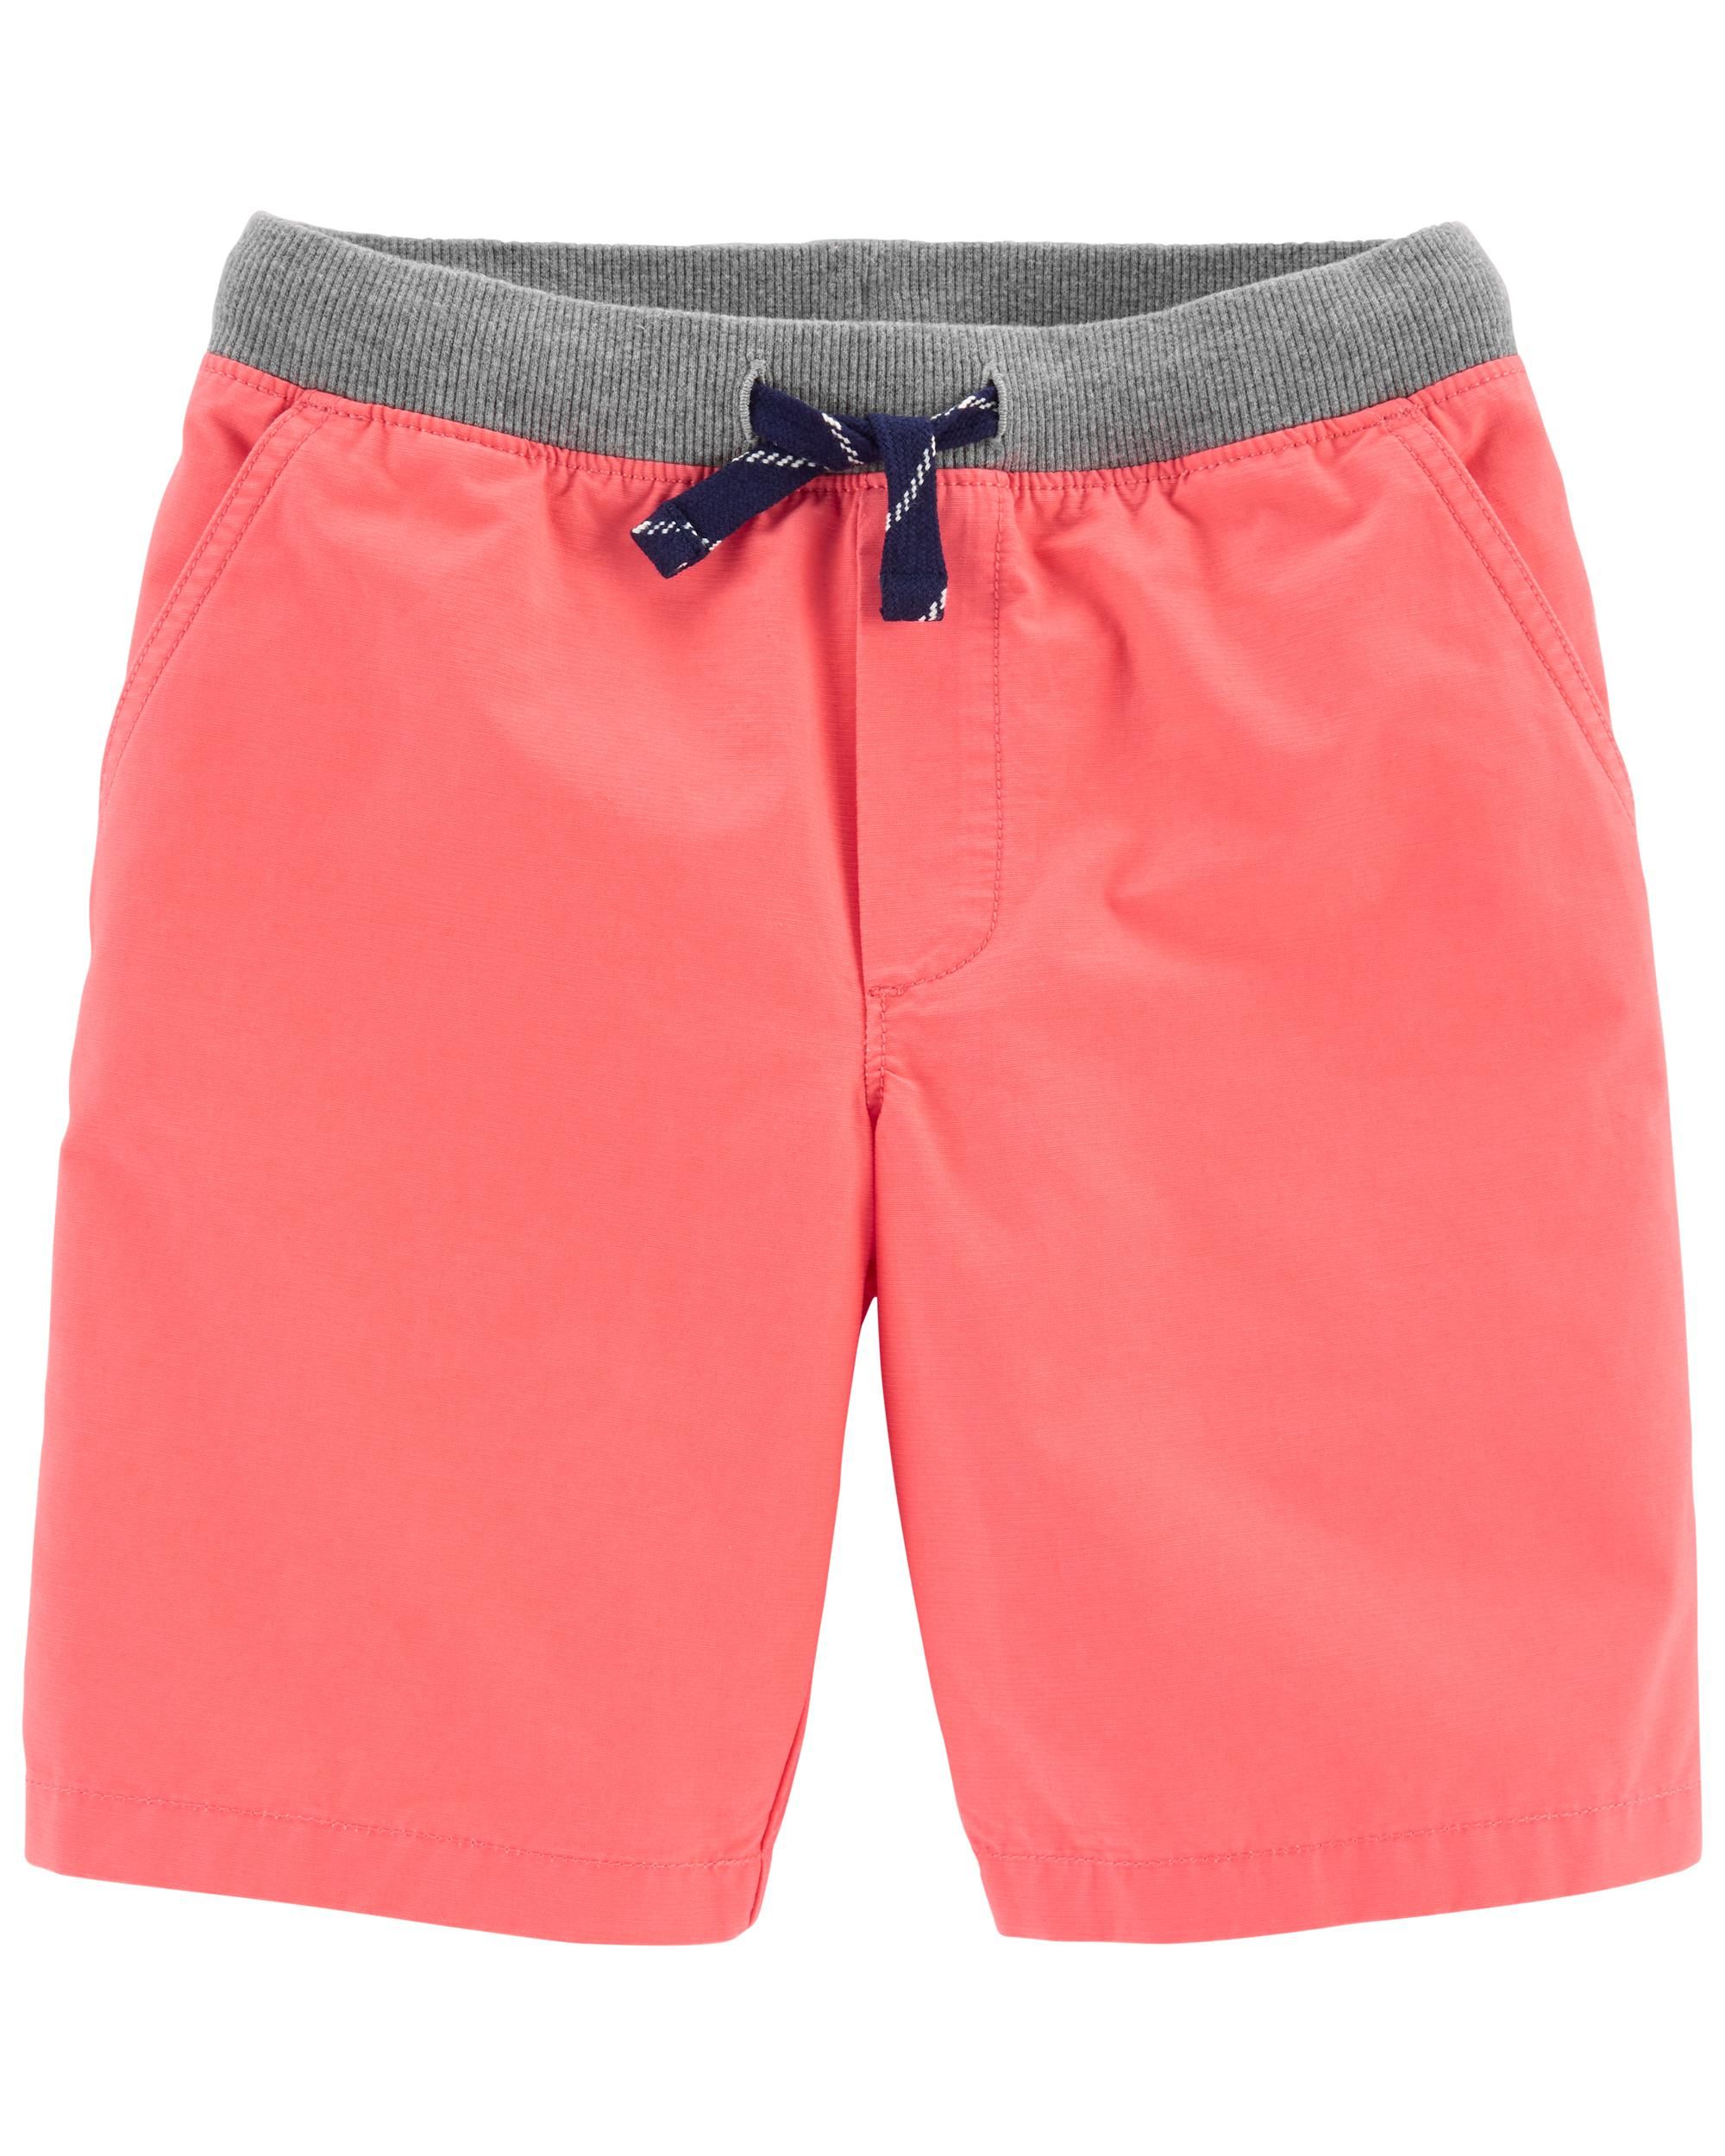 Easy Pull-On Dock Shorts | Carter's